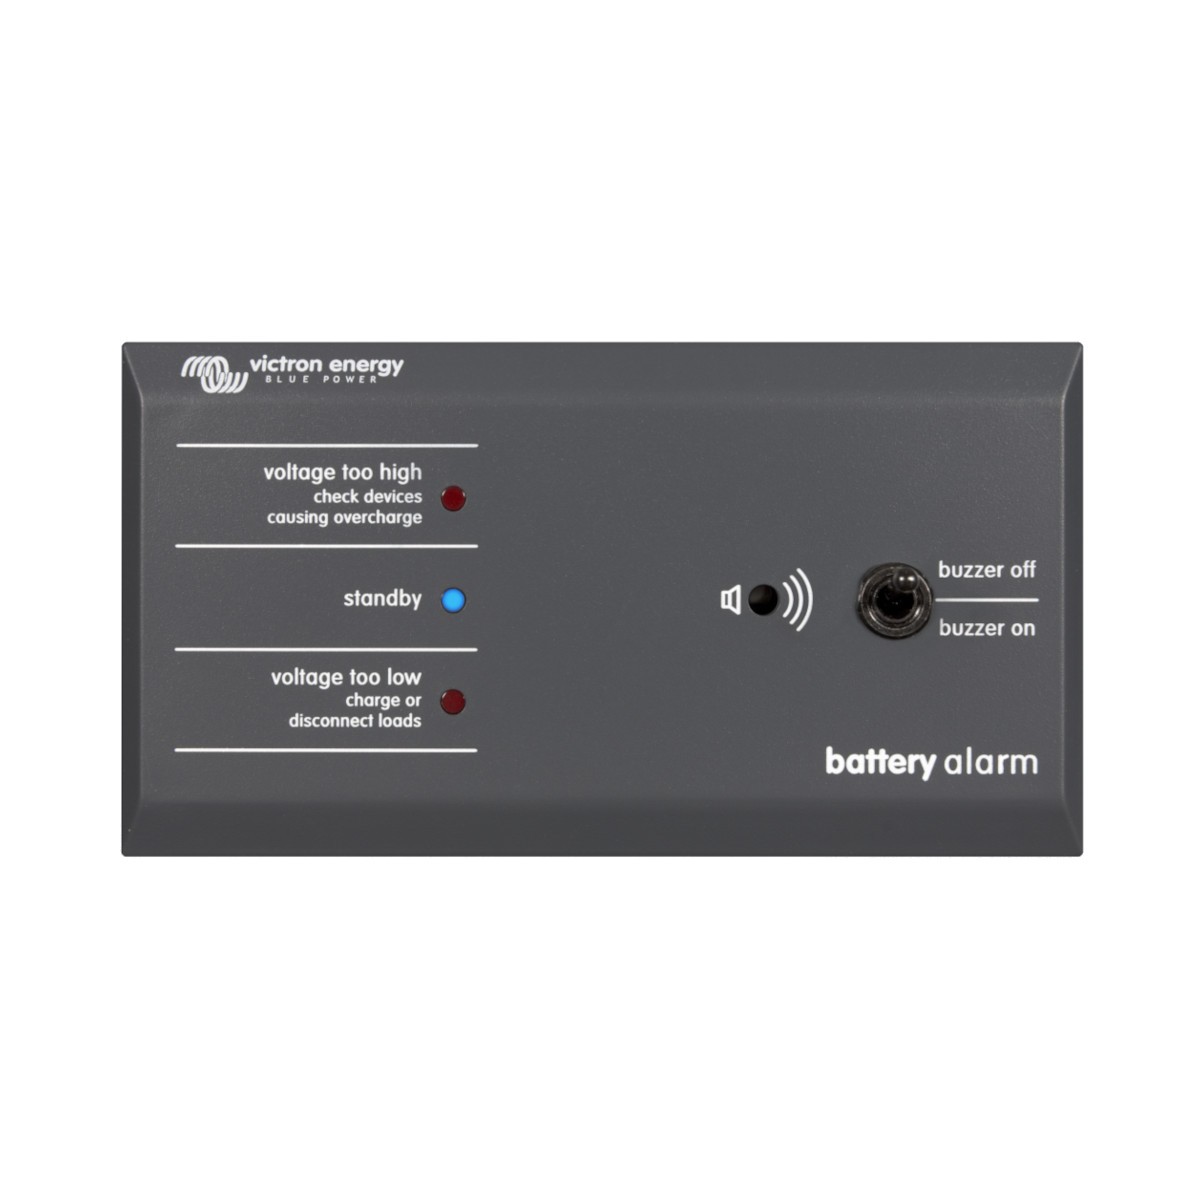 Alarmzentrale GX für Victron Energy-Batterien